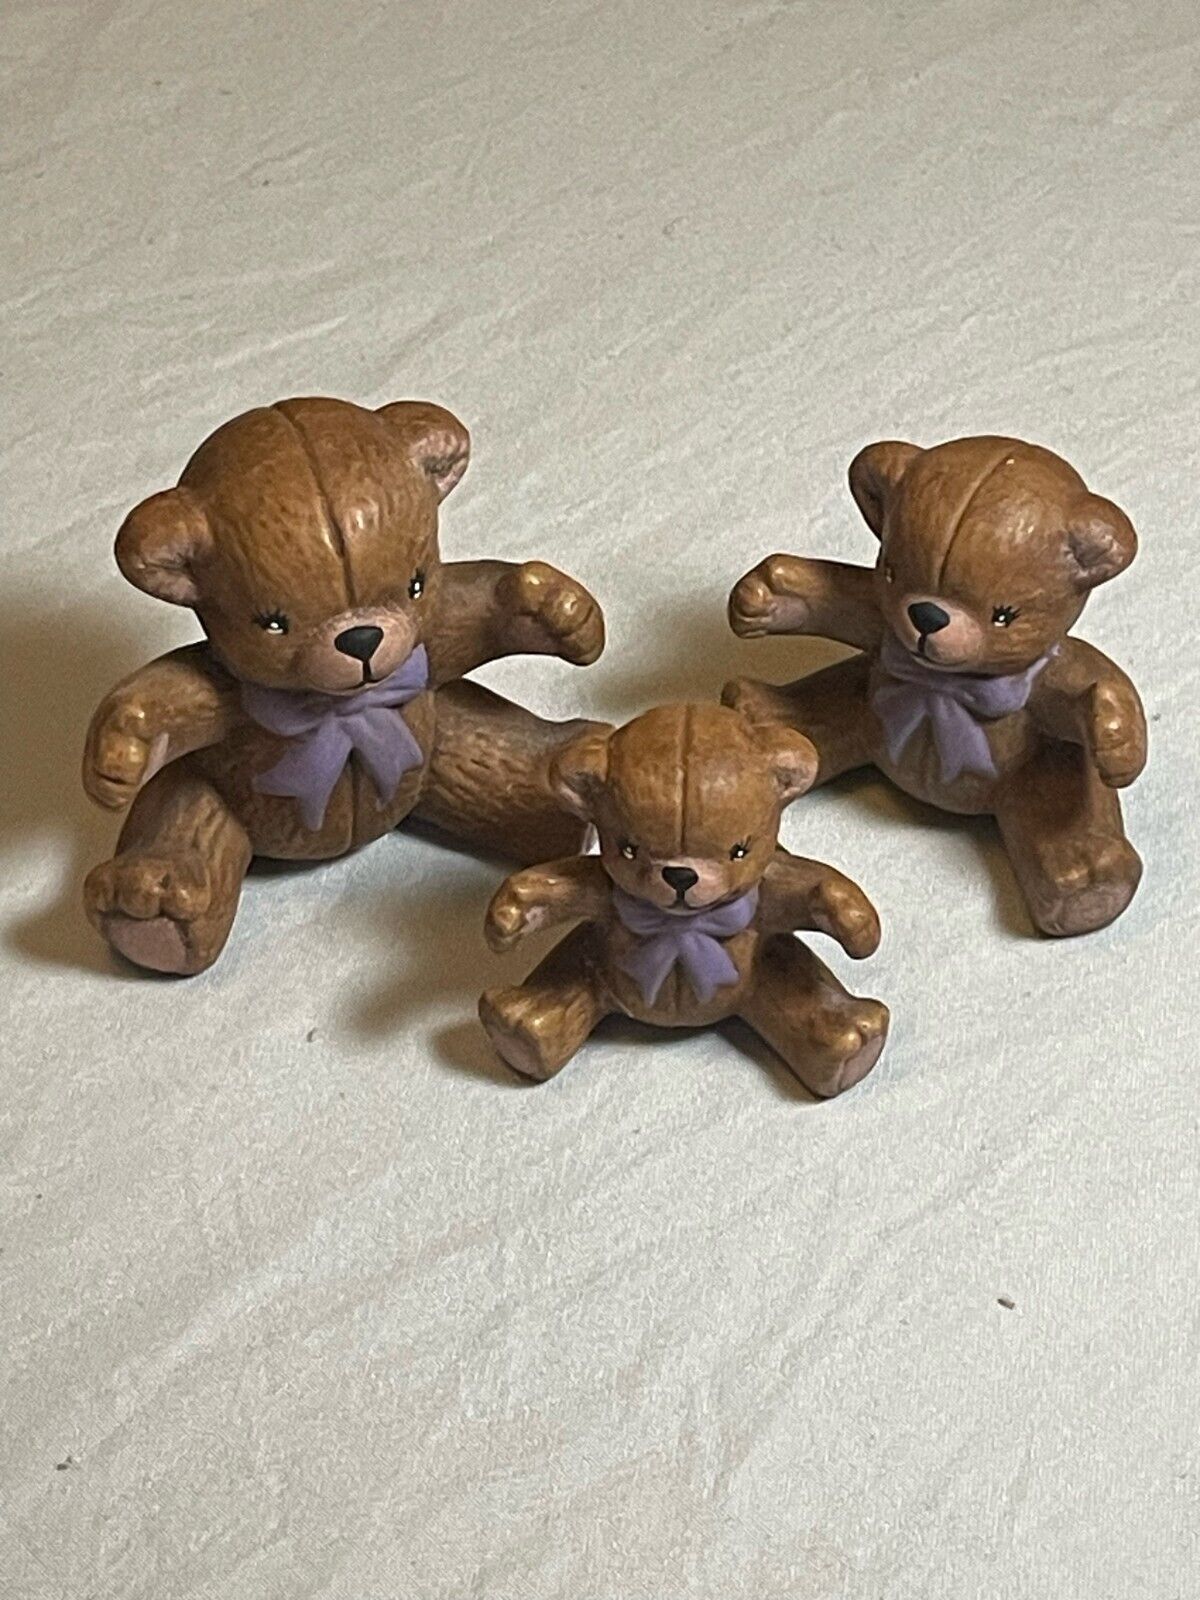 Vintage Ceramic Teddy Bear Figurines Lot of 3 Cute Big Medium Small